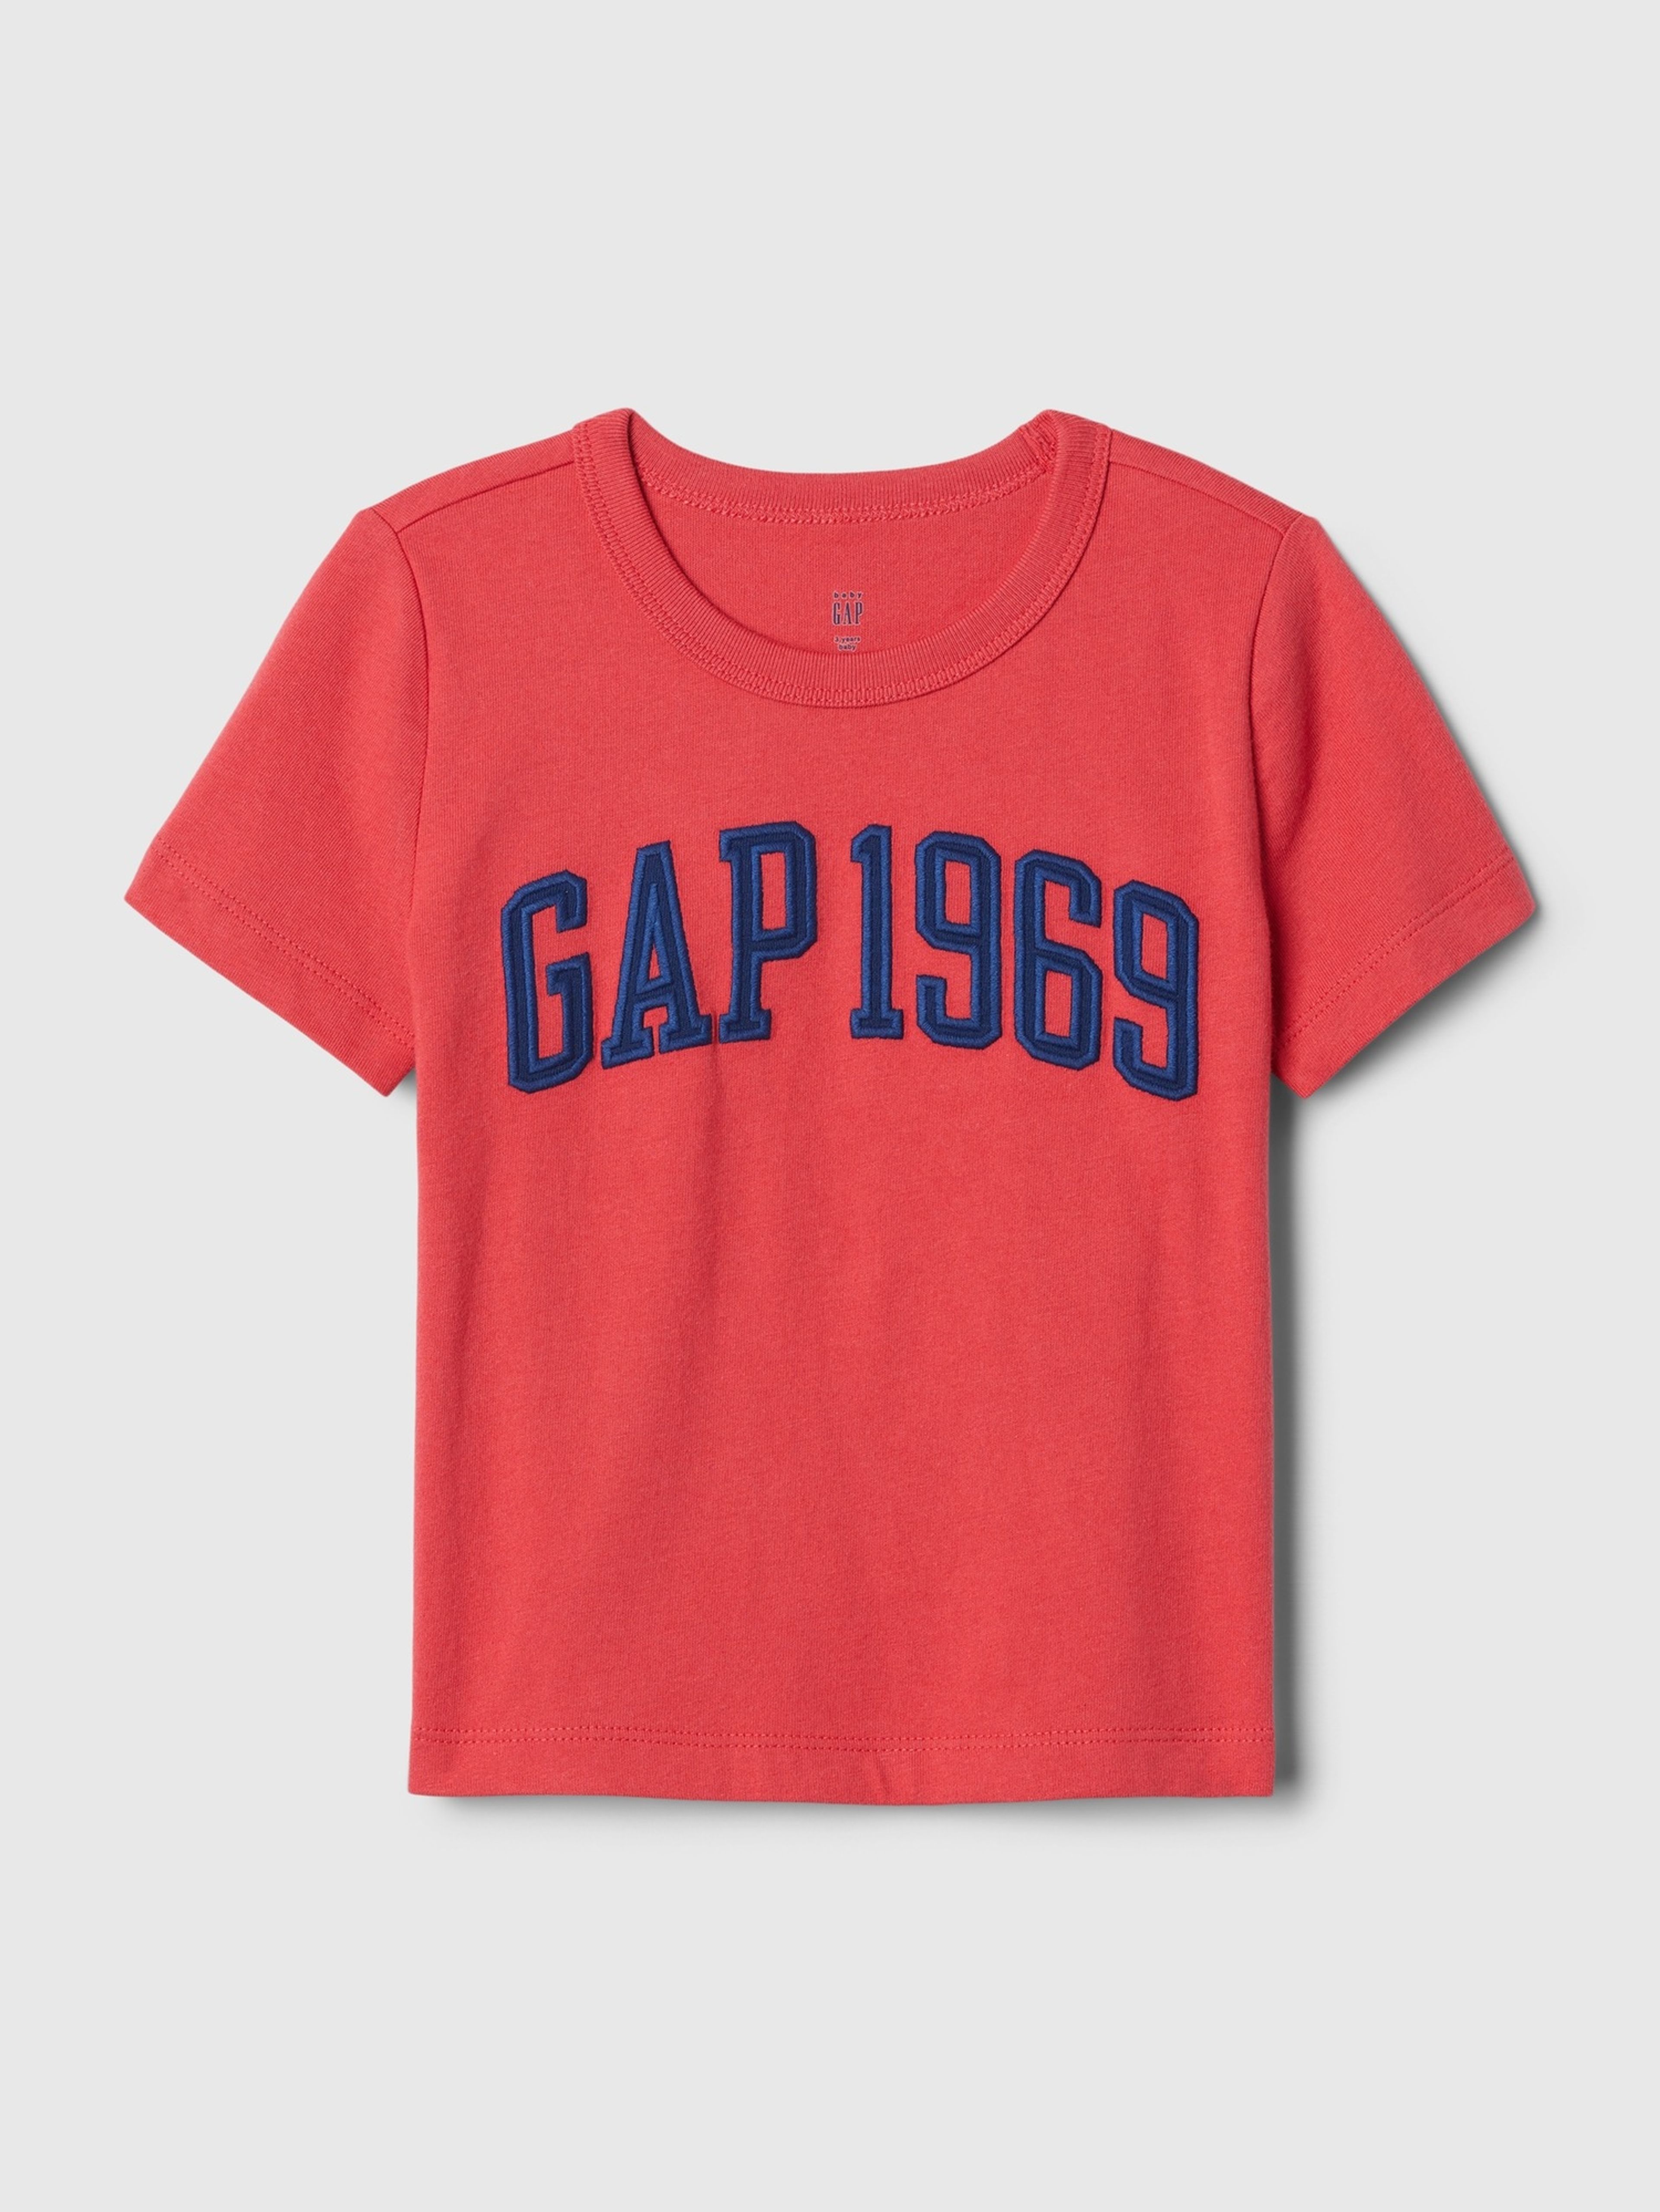 Koszulka dziecięca GAP 1969